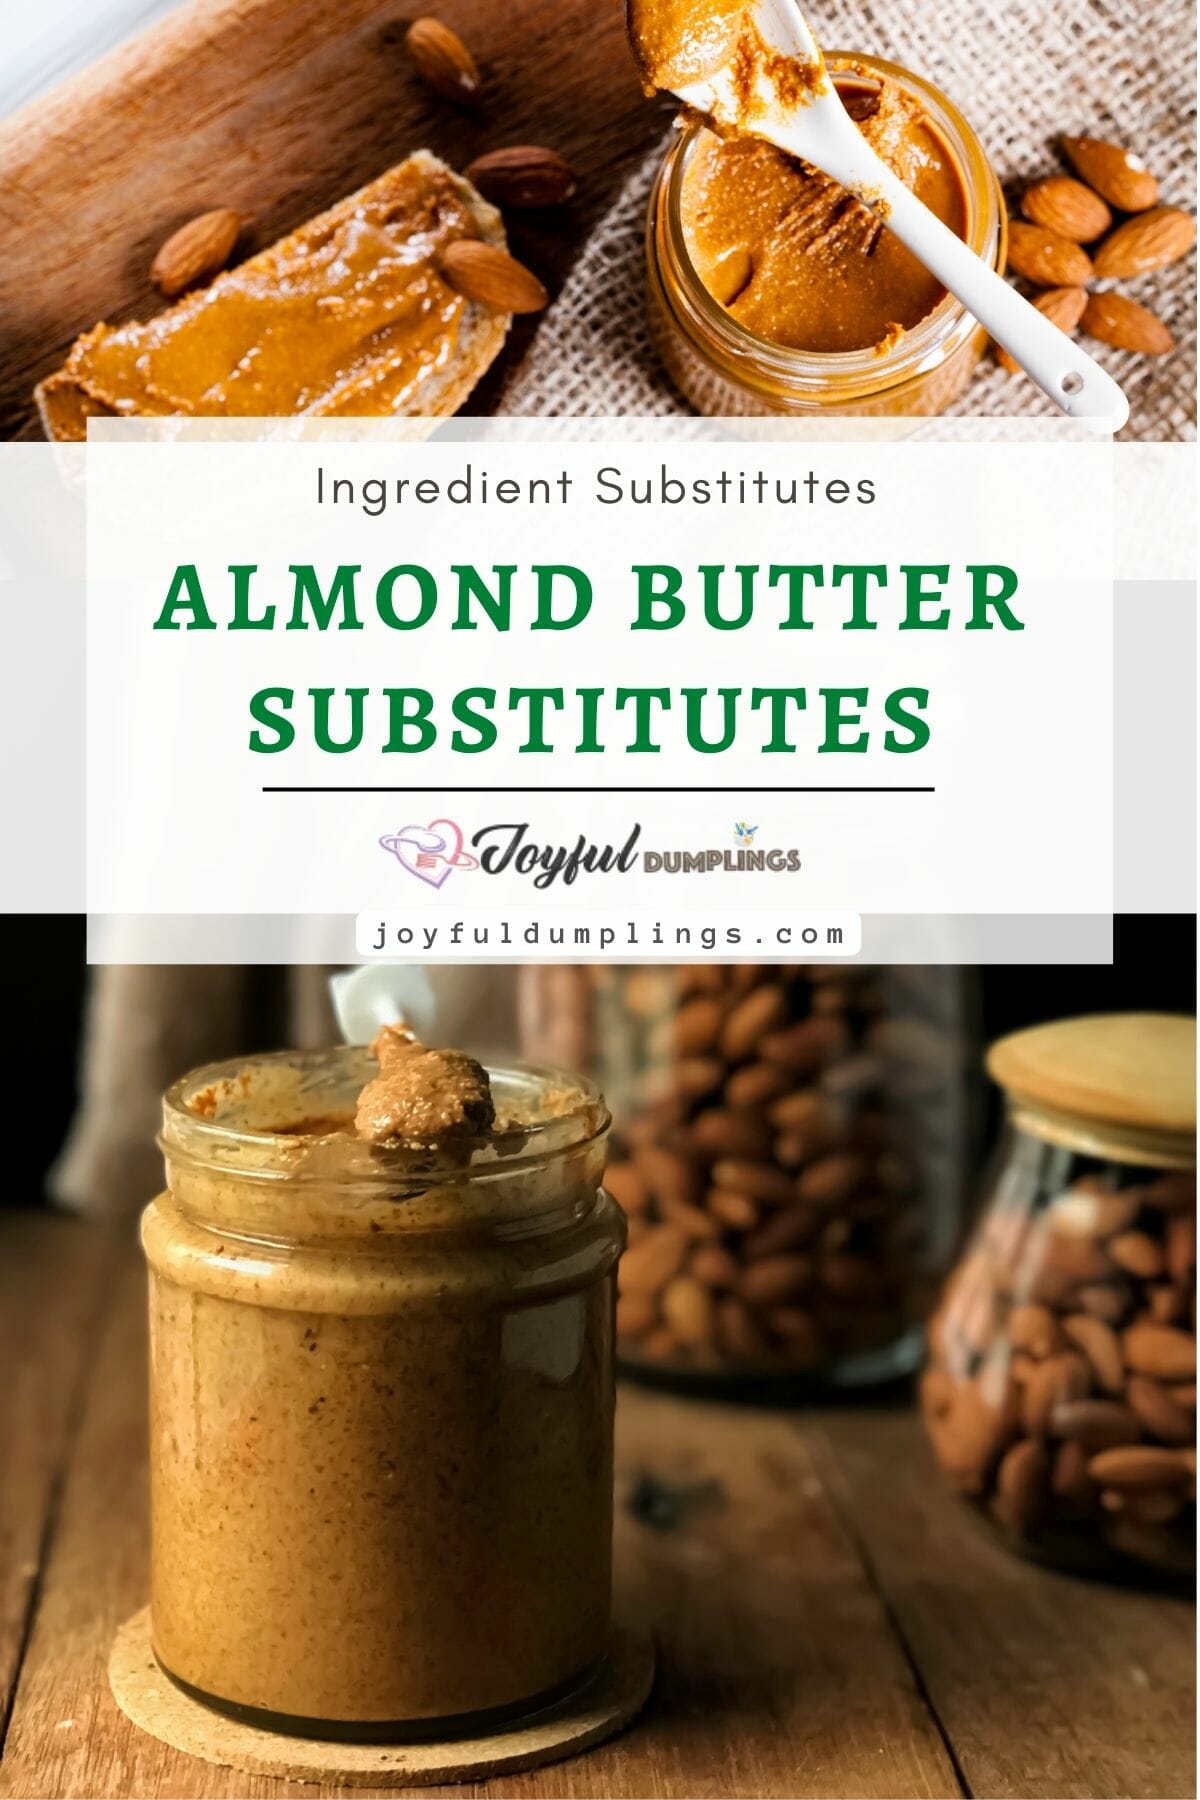 https://joyfuldumplings.com/wp-content/uploads/2022/11/substitute-for-almond-butter.jpg